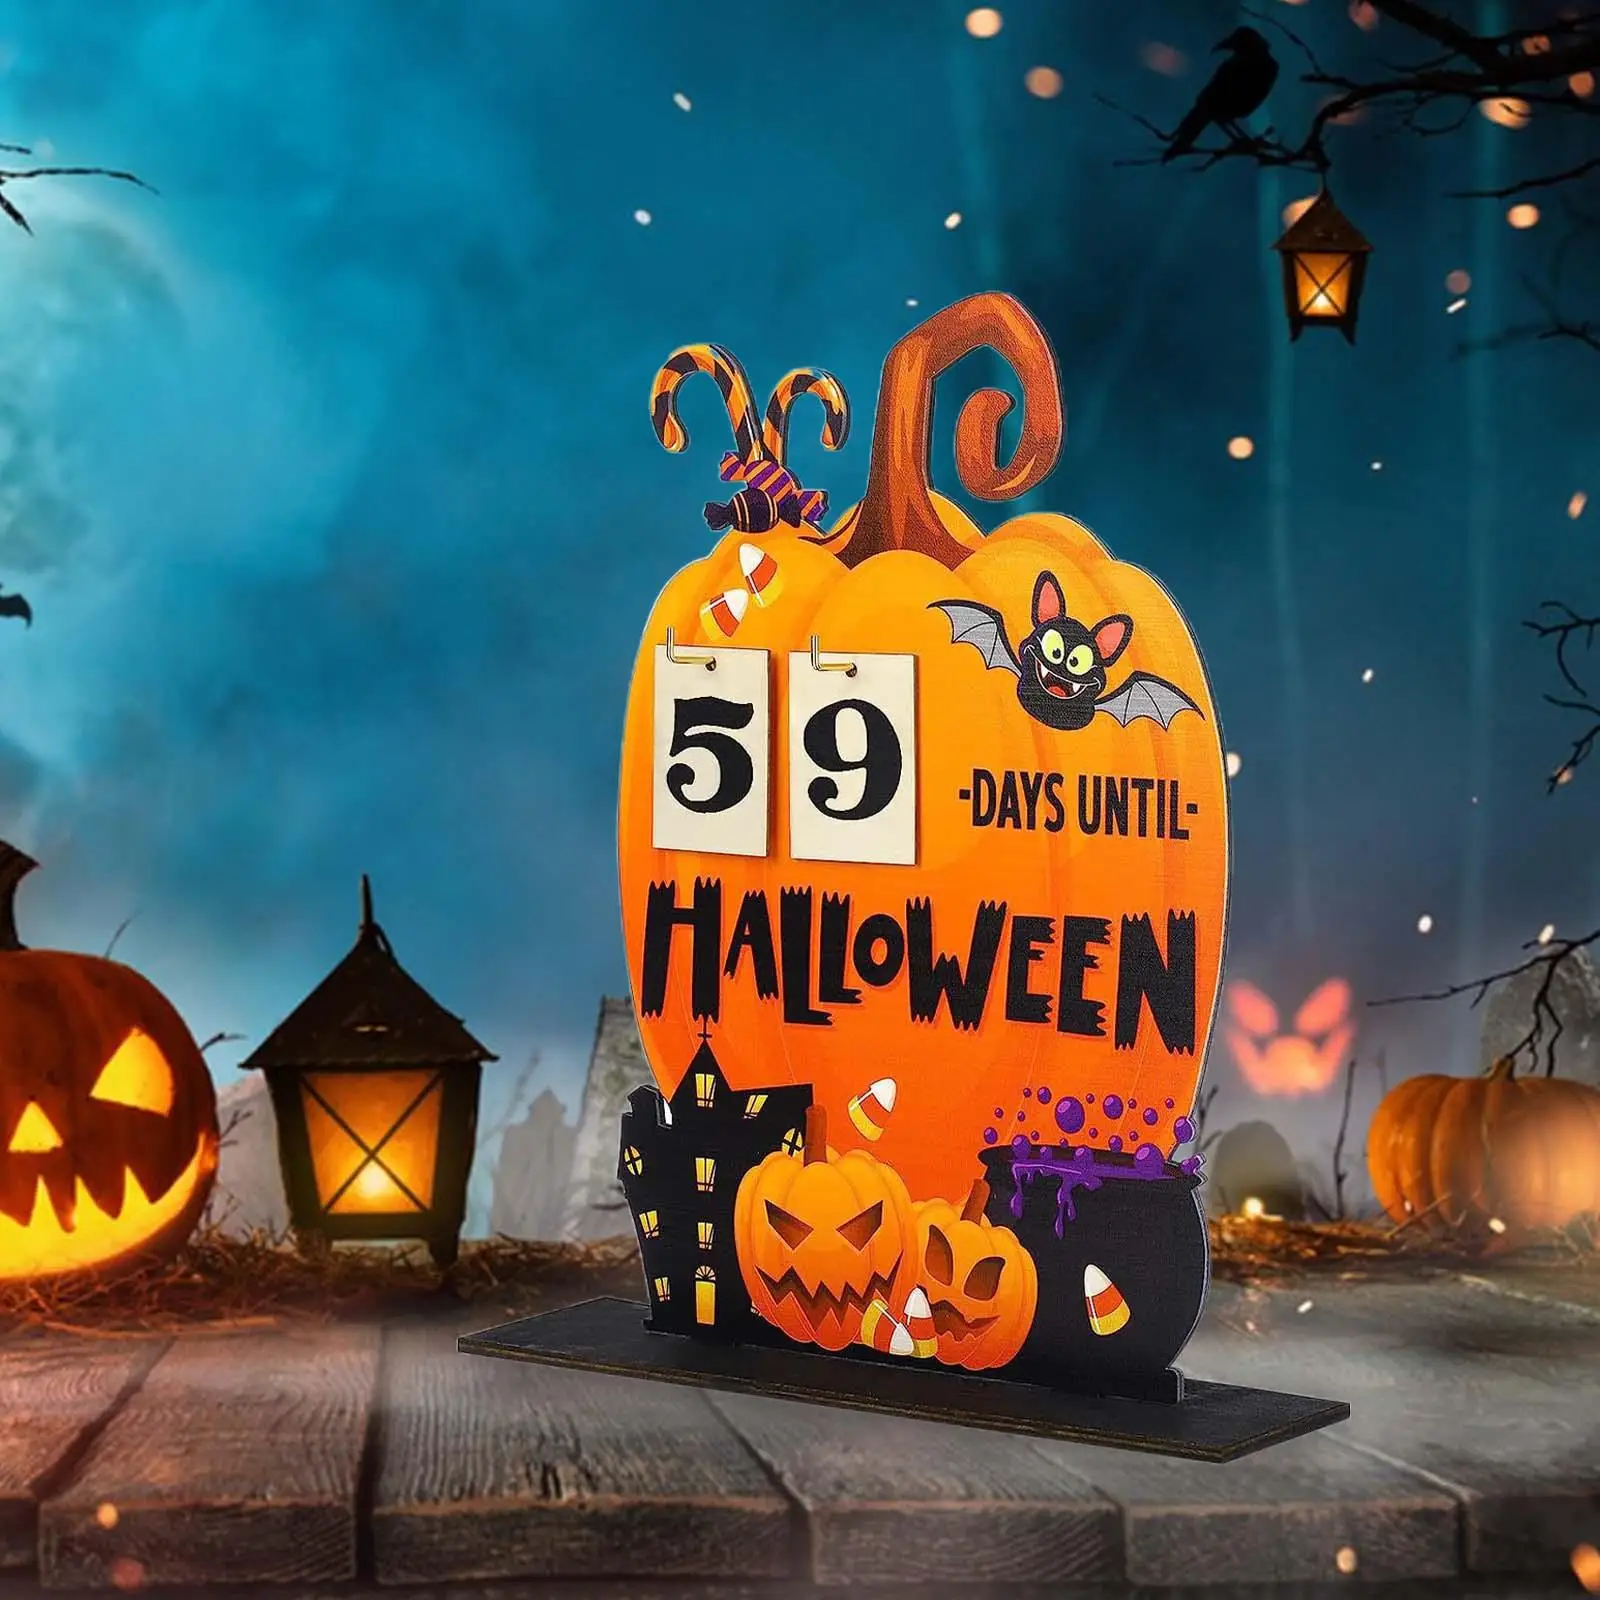 Wooden Halloween Pumpkin Advent Countdown Calendar Decoration Cute Patterns Reusable Handicrafts for Interactive Family Plays